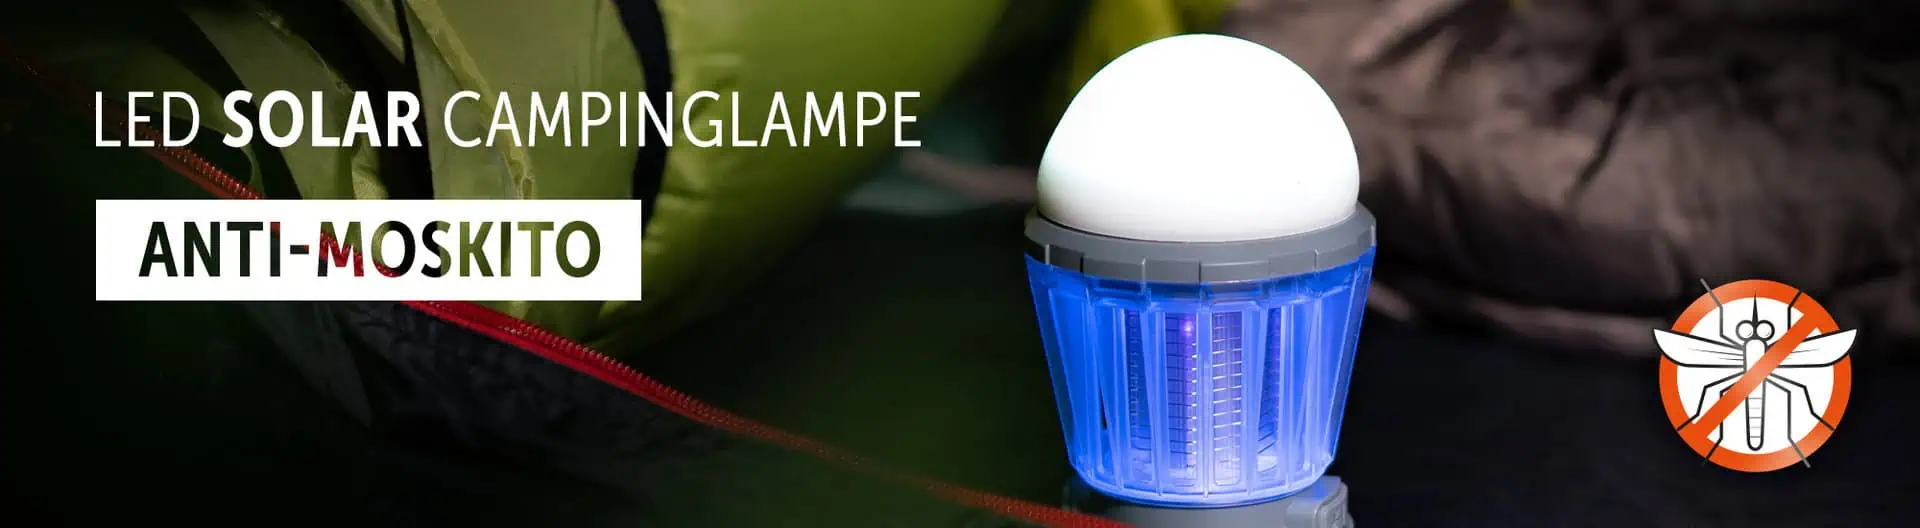 LED Solar Campinglampe Anti-Moskito hellgrau